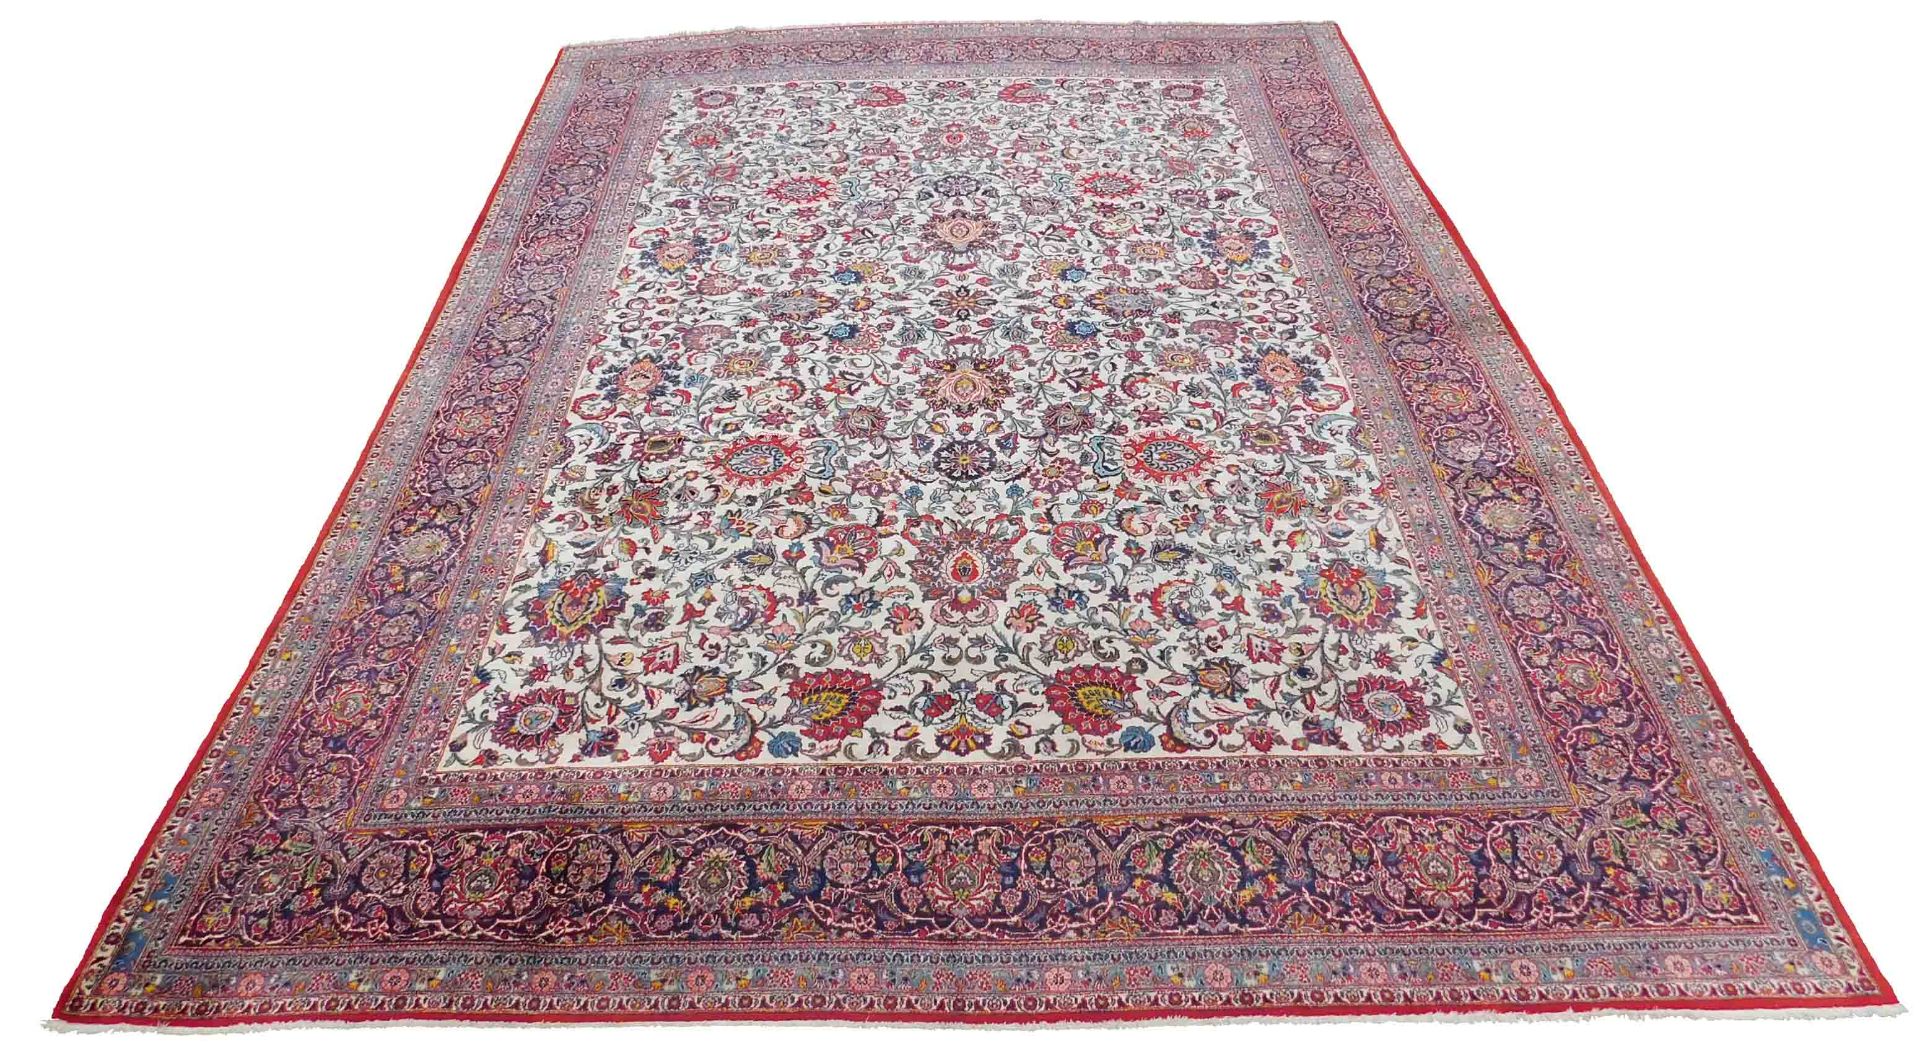 Keschan Persian carpet. Iran. Very fine weave. Cork wool.445 cm x 320 cm. Knotted by hand. Cork wool